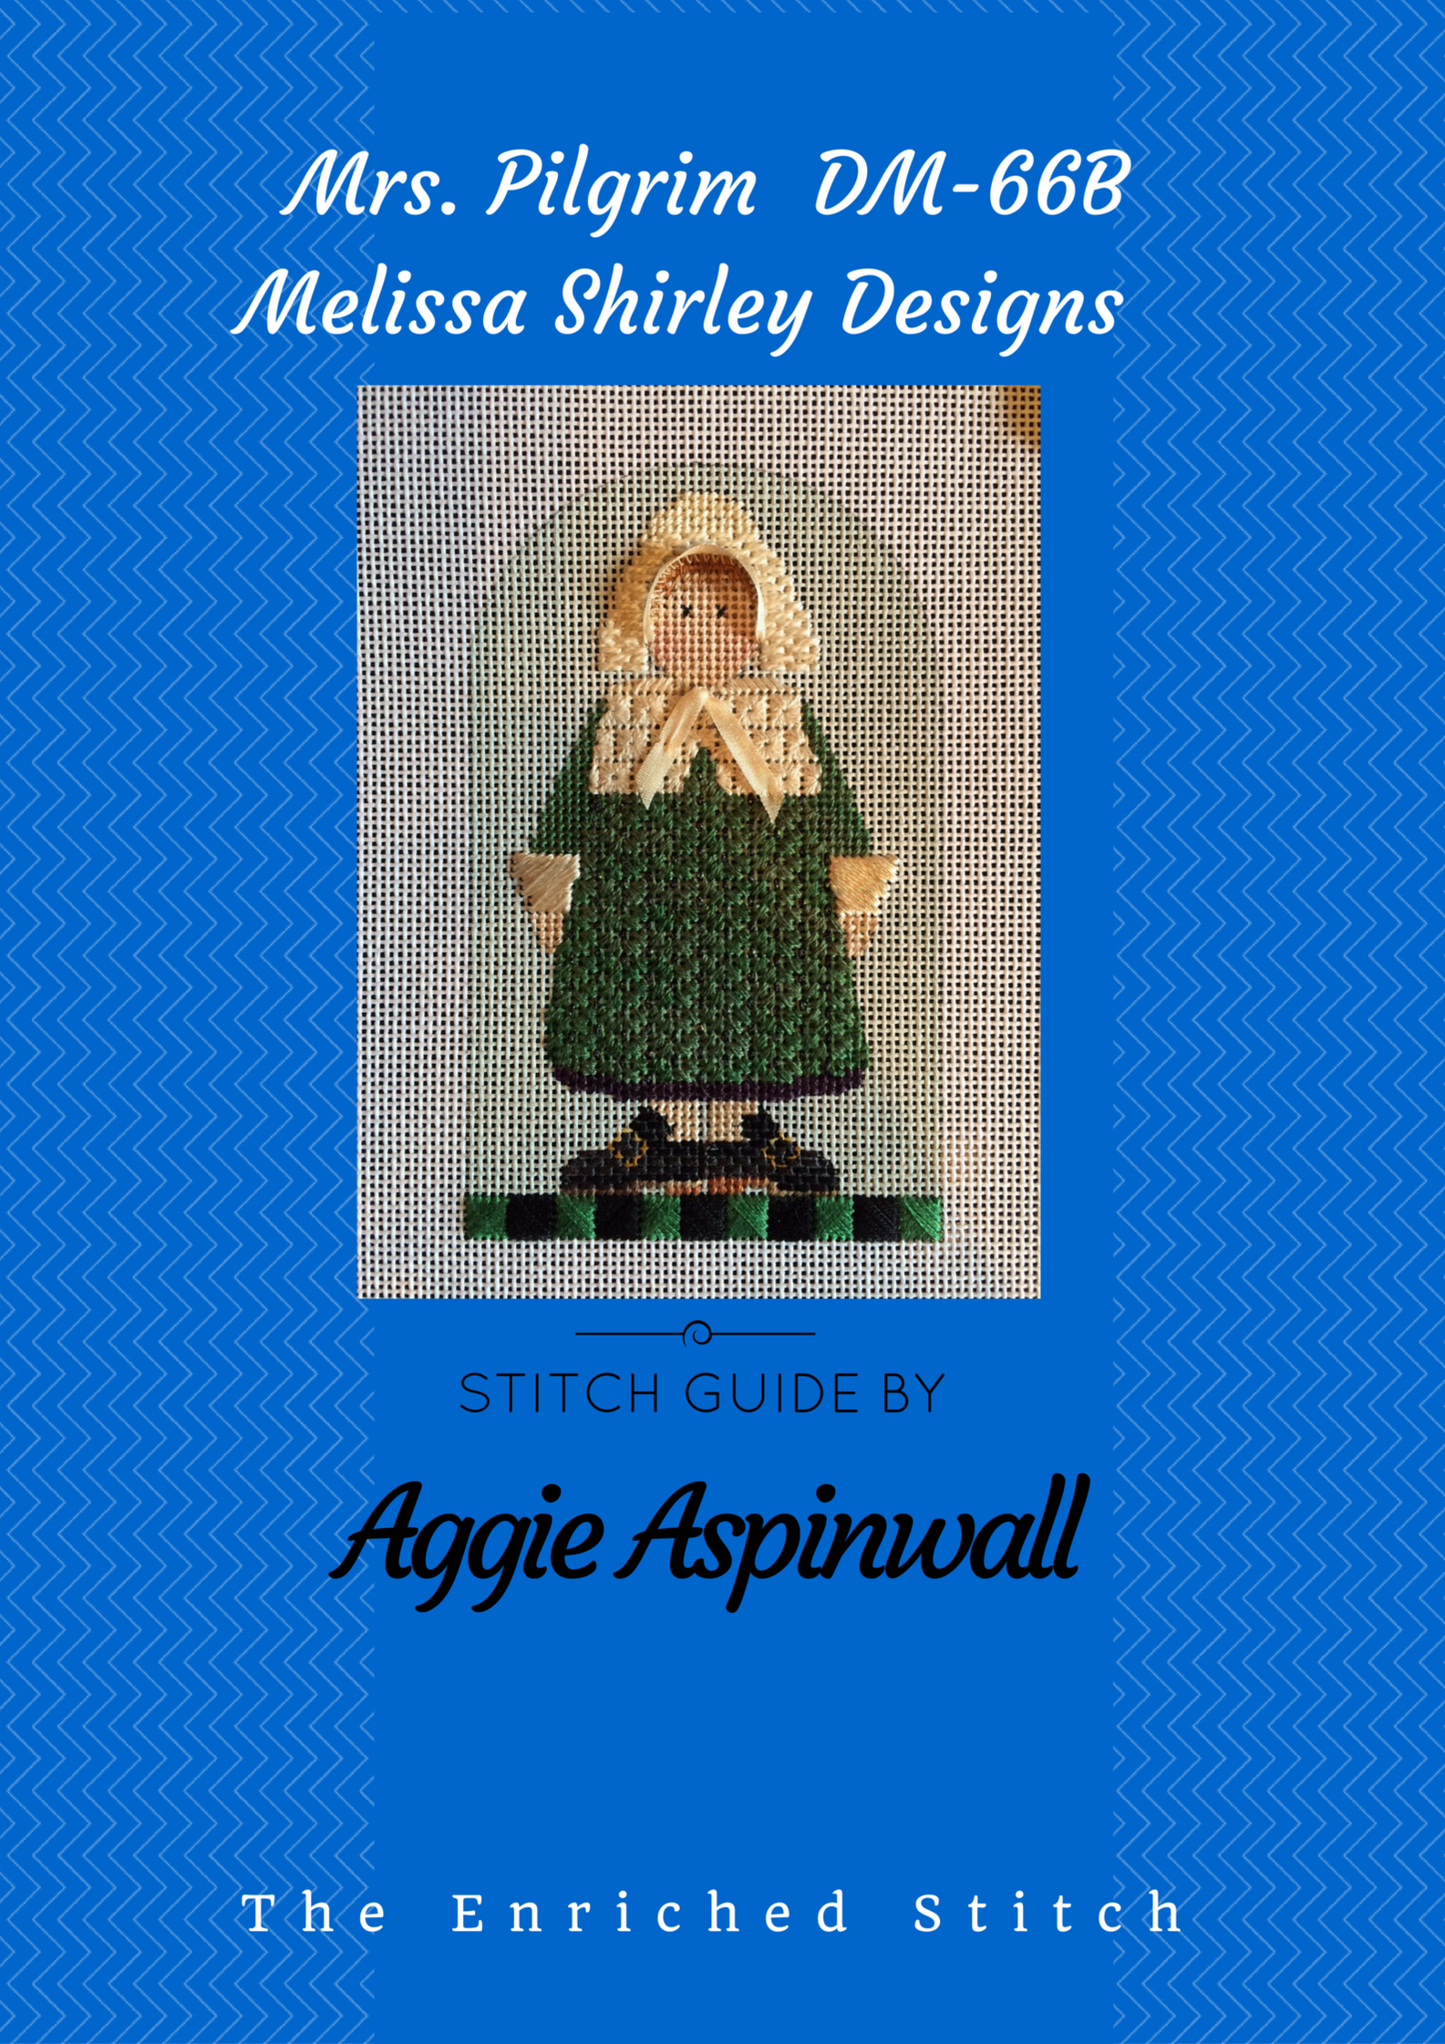 Mrs. Pilgrim Stitch Guide